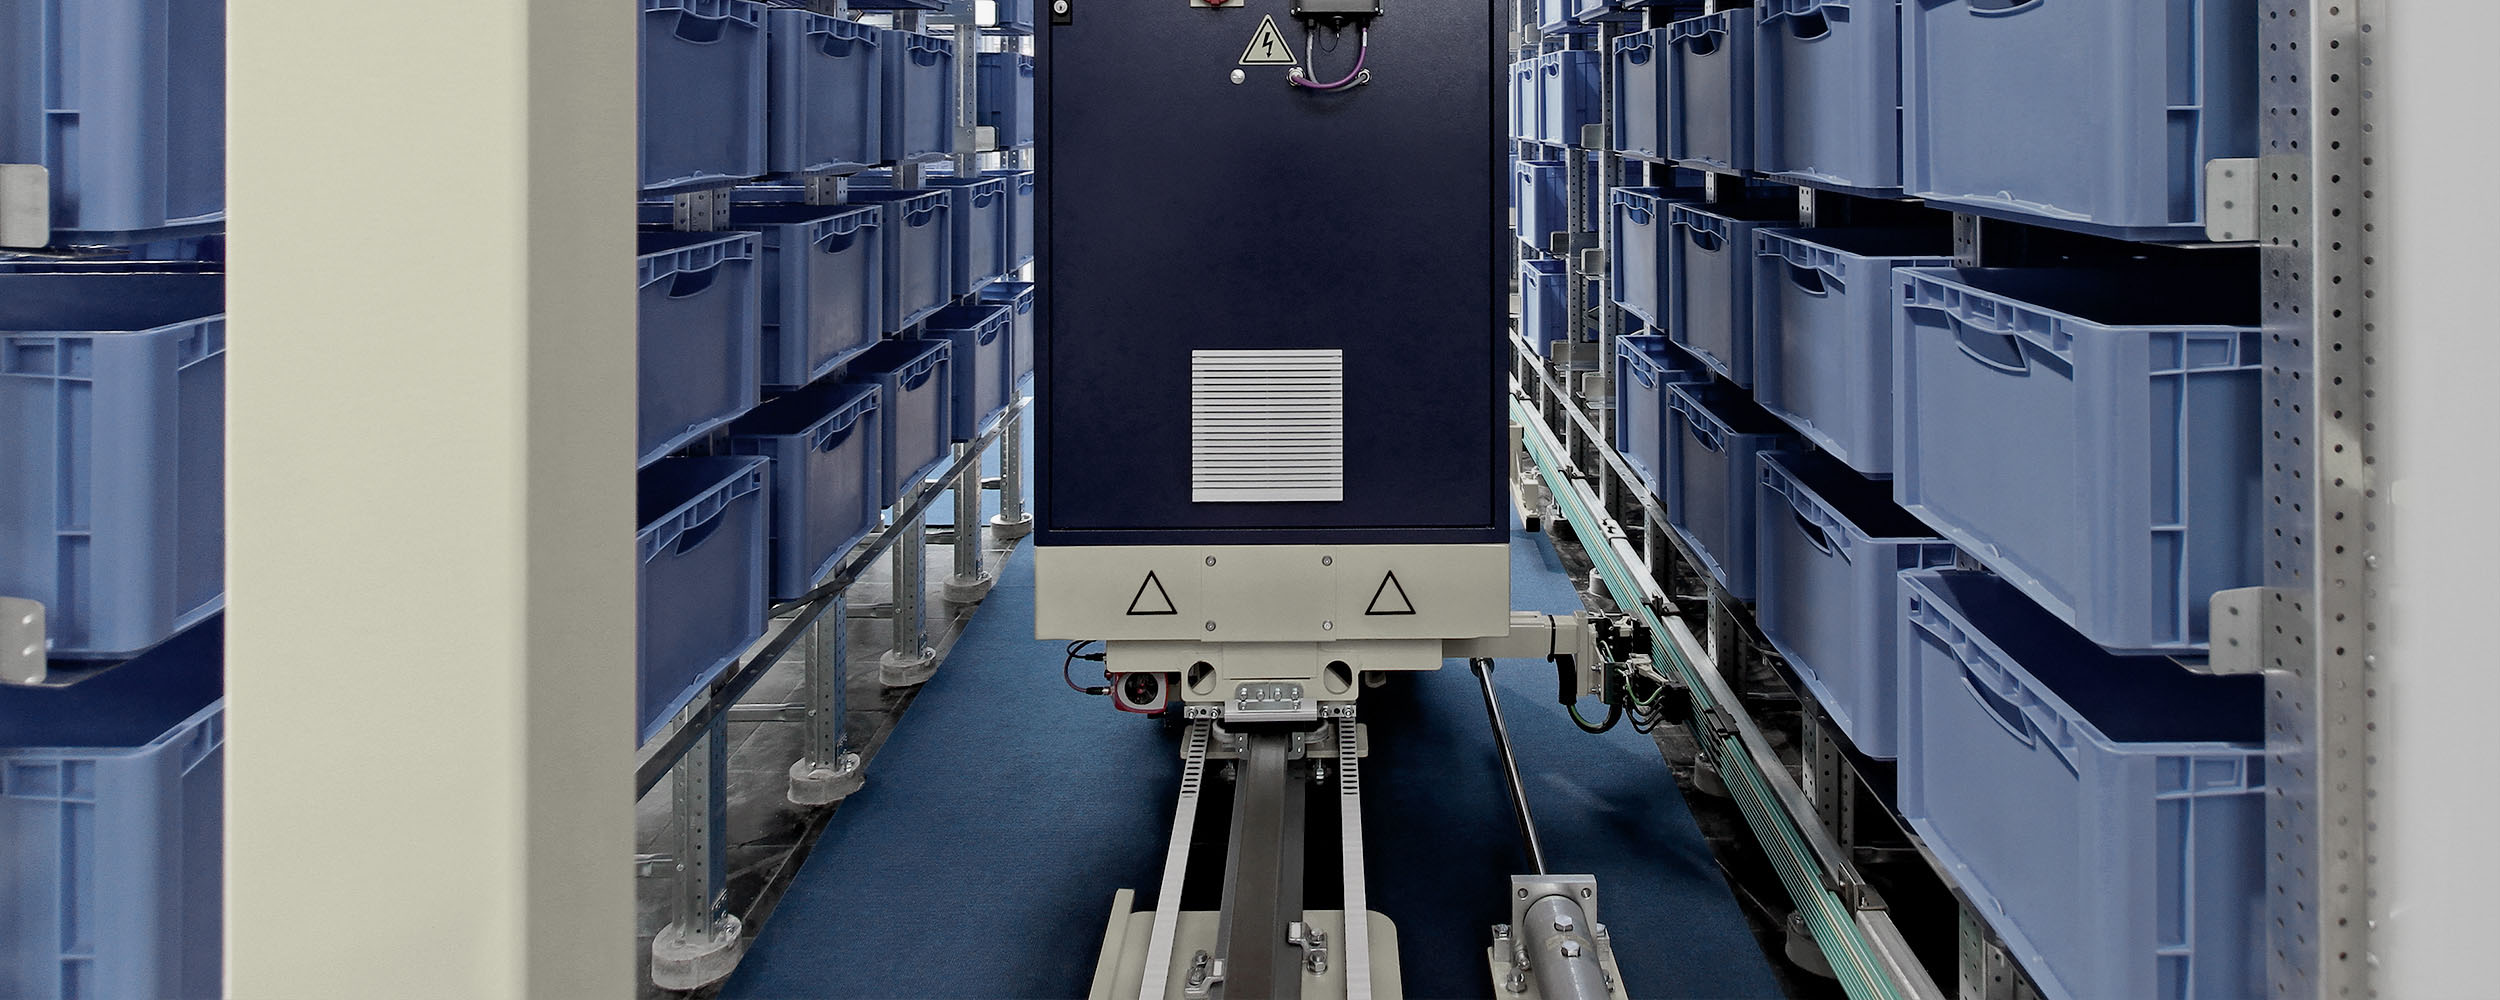 Automated storage warehouse